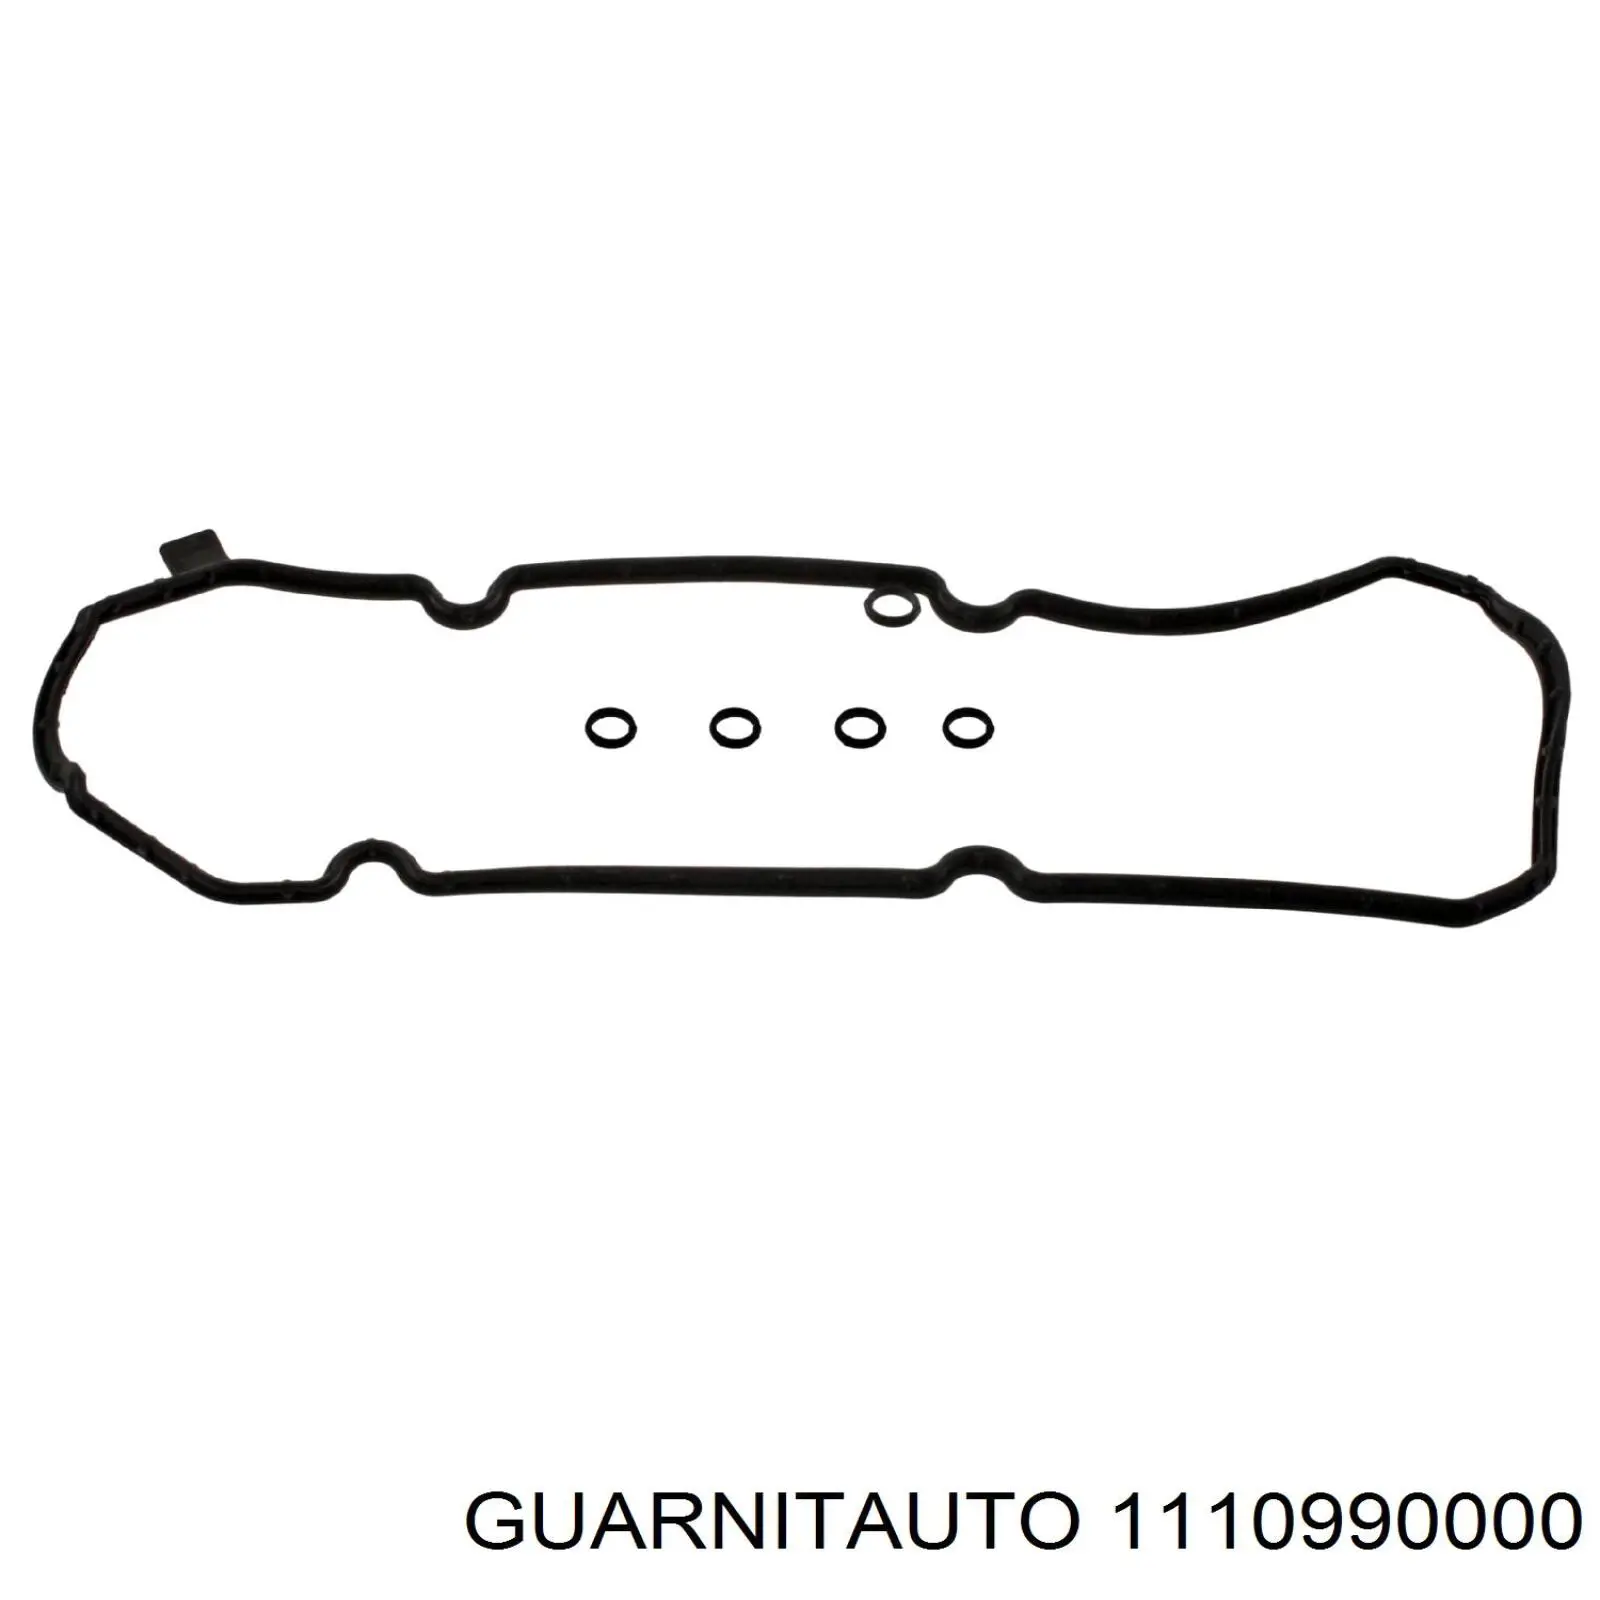 1110990000 Guarnitauto прокладка клапанной крышки двигателя, комплект